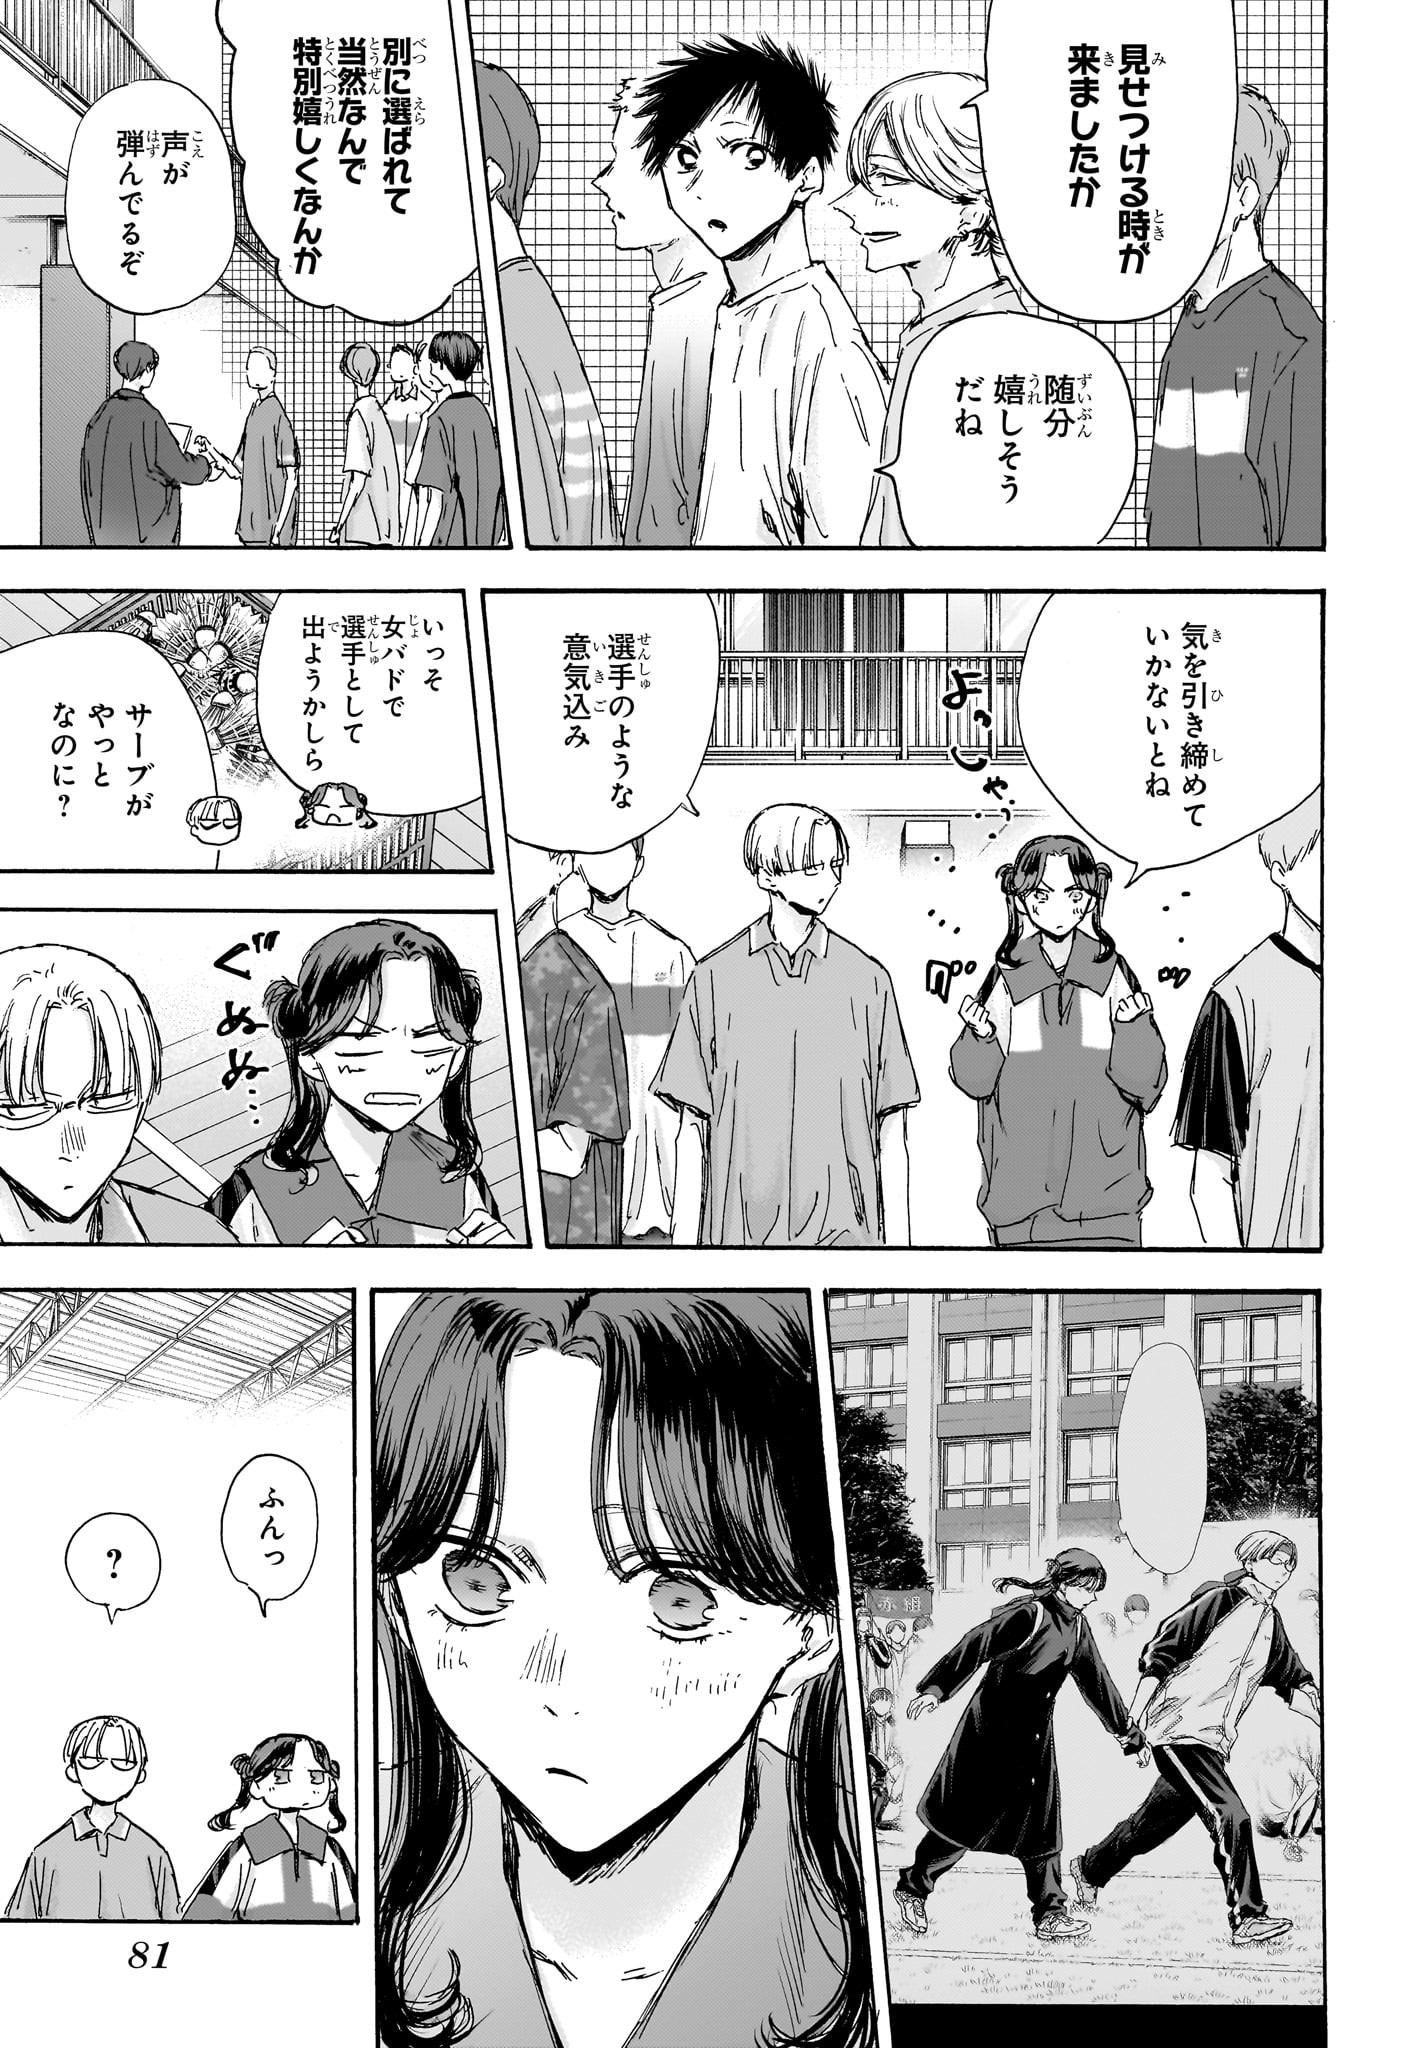 Ao no Hako - Chapter 127 - Page 3